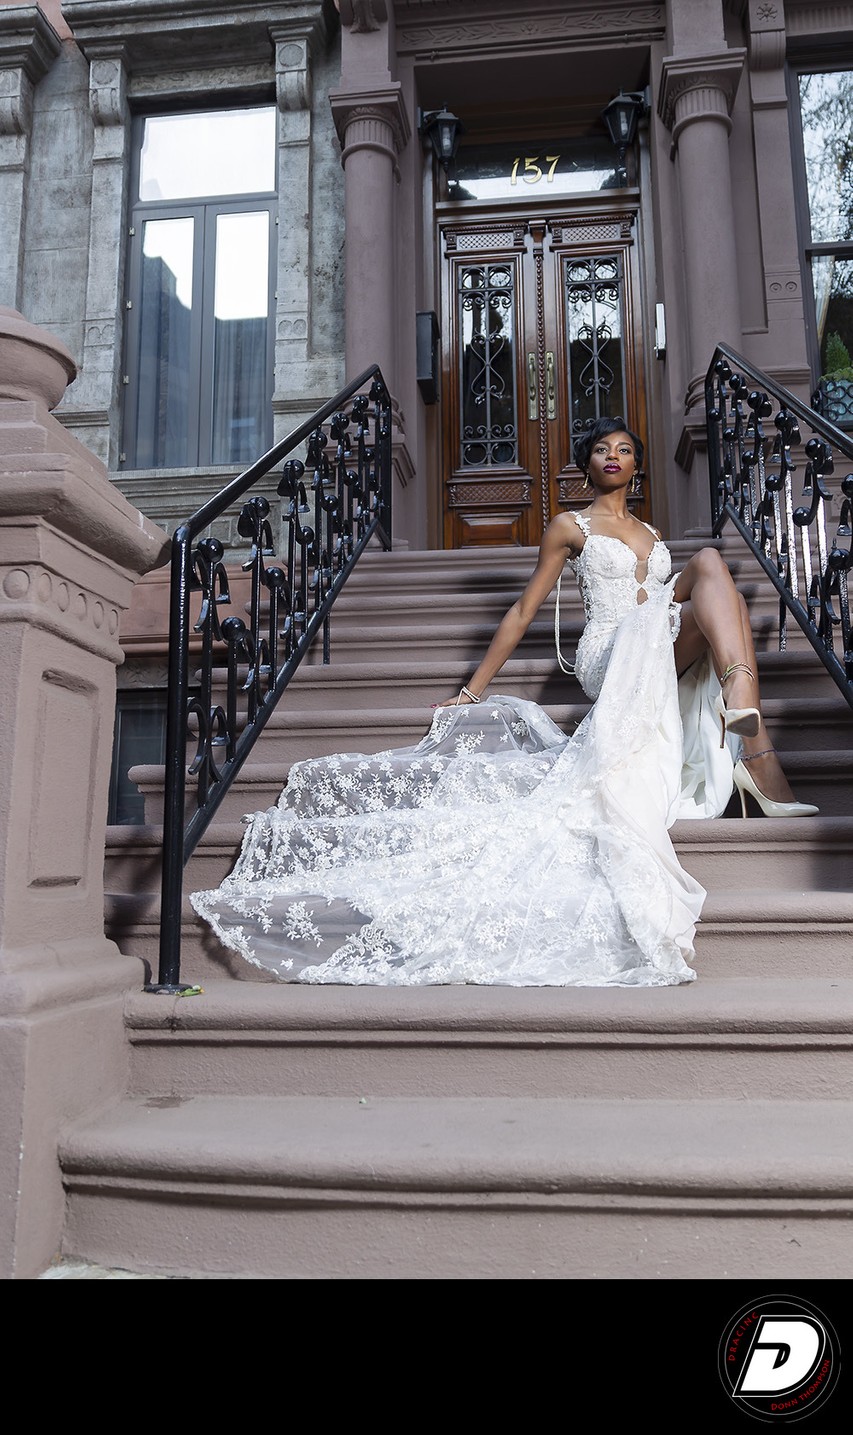 Upscale Magazine Bridal Gown Photo